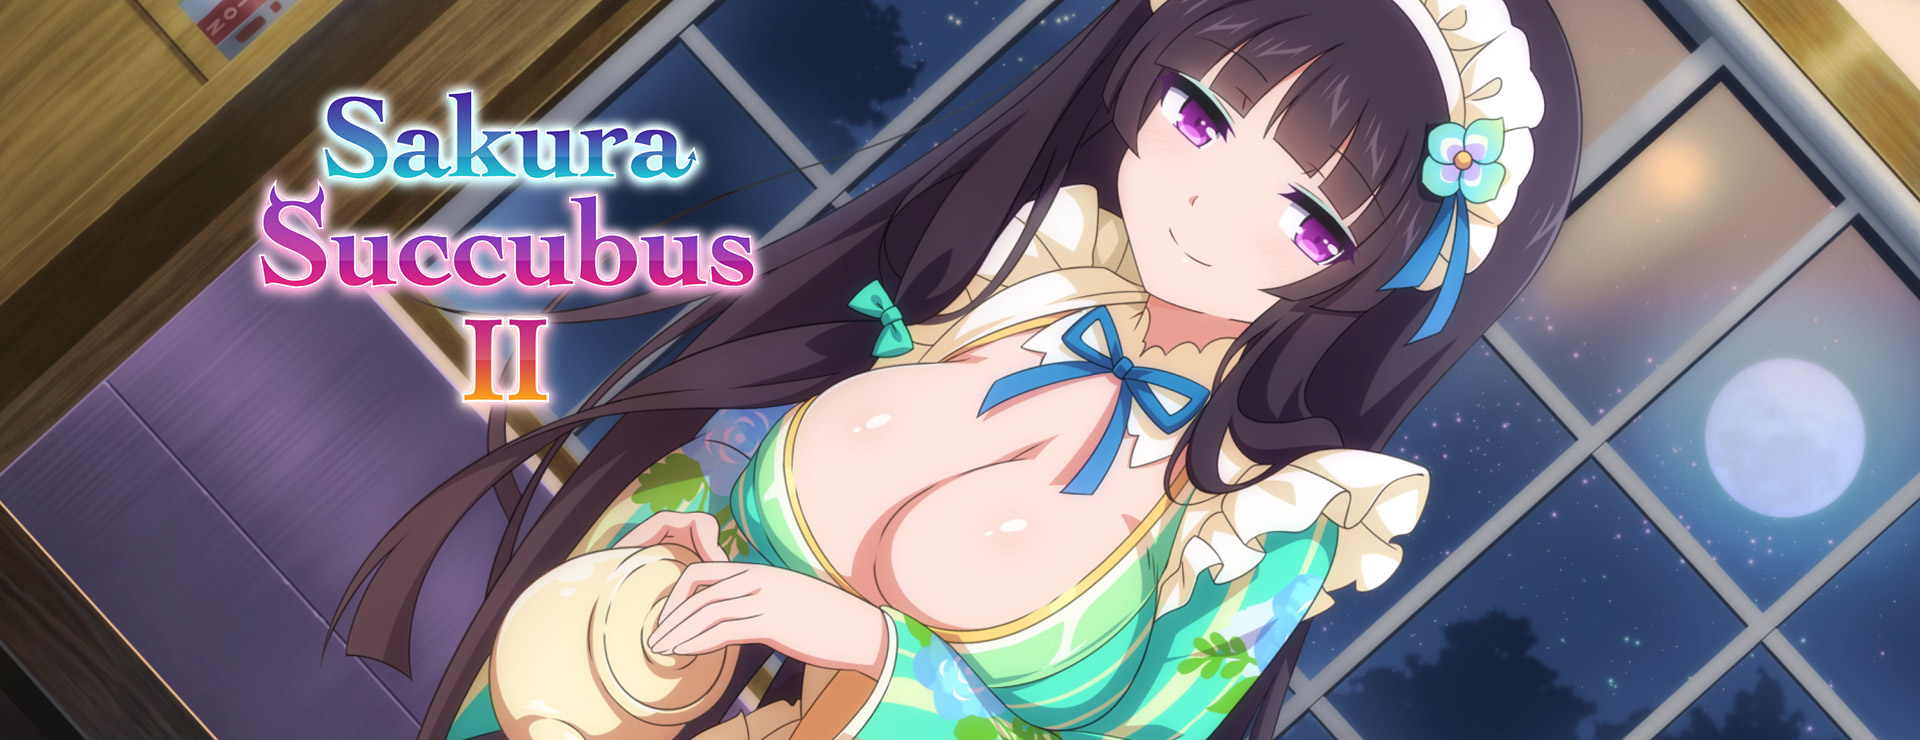 Sakura Succubus 2 - Visual Novel Game